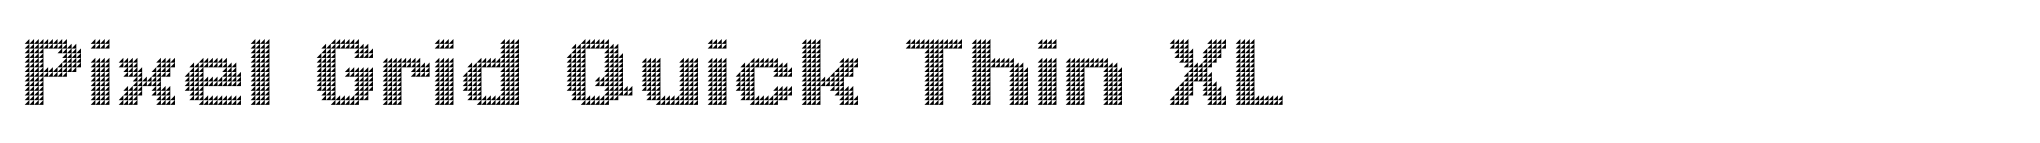 Pixel Grid Quick Thin XL image